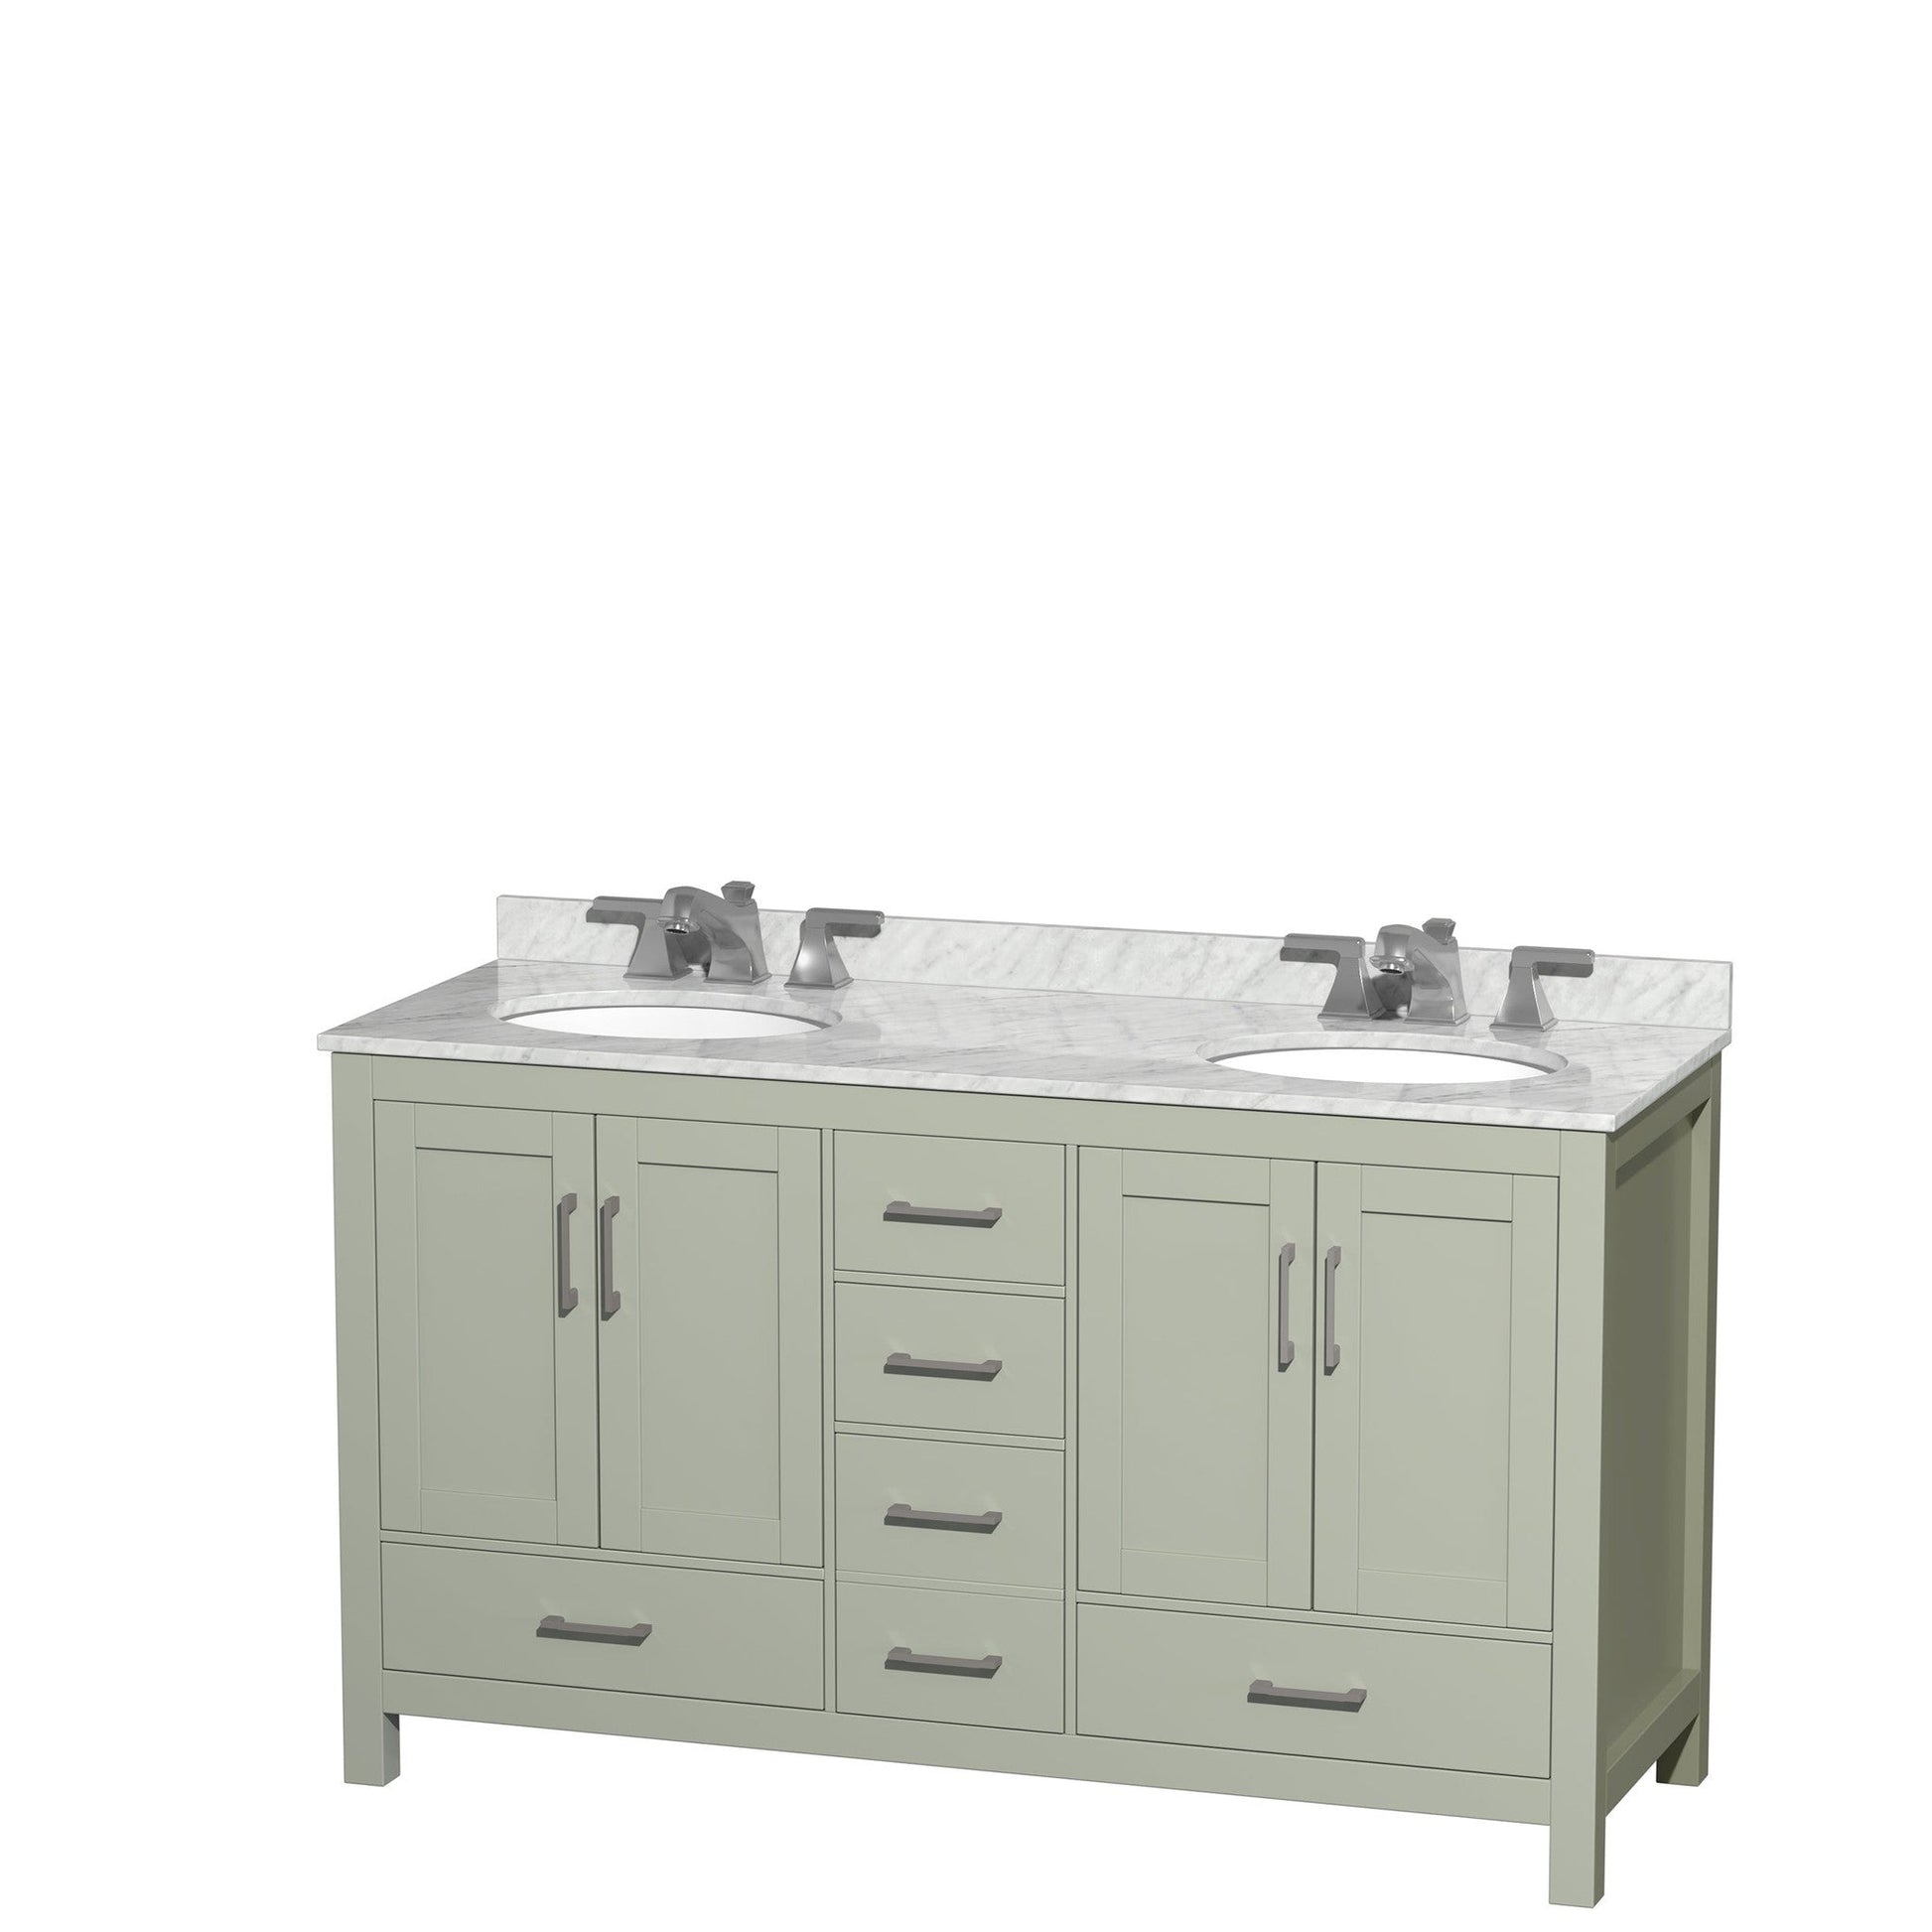 Sheffield 60" Double Bathroom Vanity in Light Green, White Carrara Marble Countertop, Undermount Oval Sinks, Brushed Nickel Trim